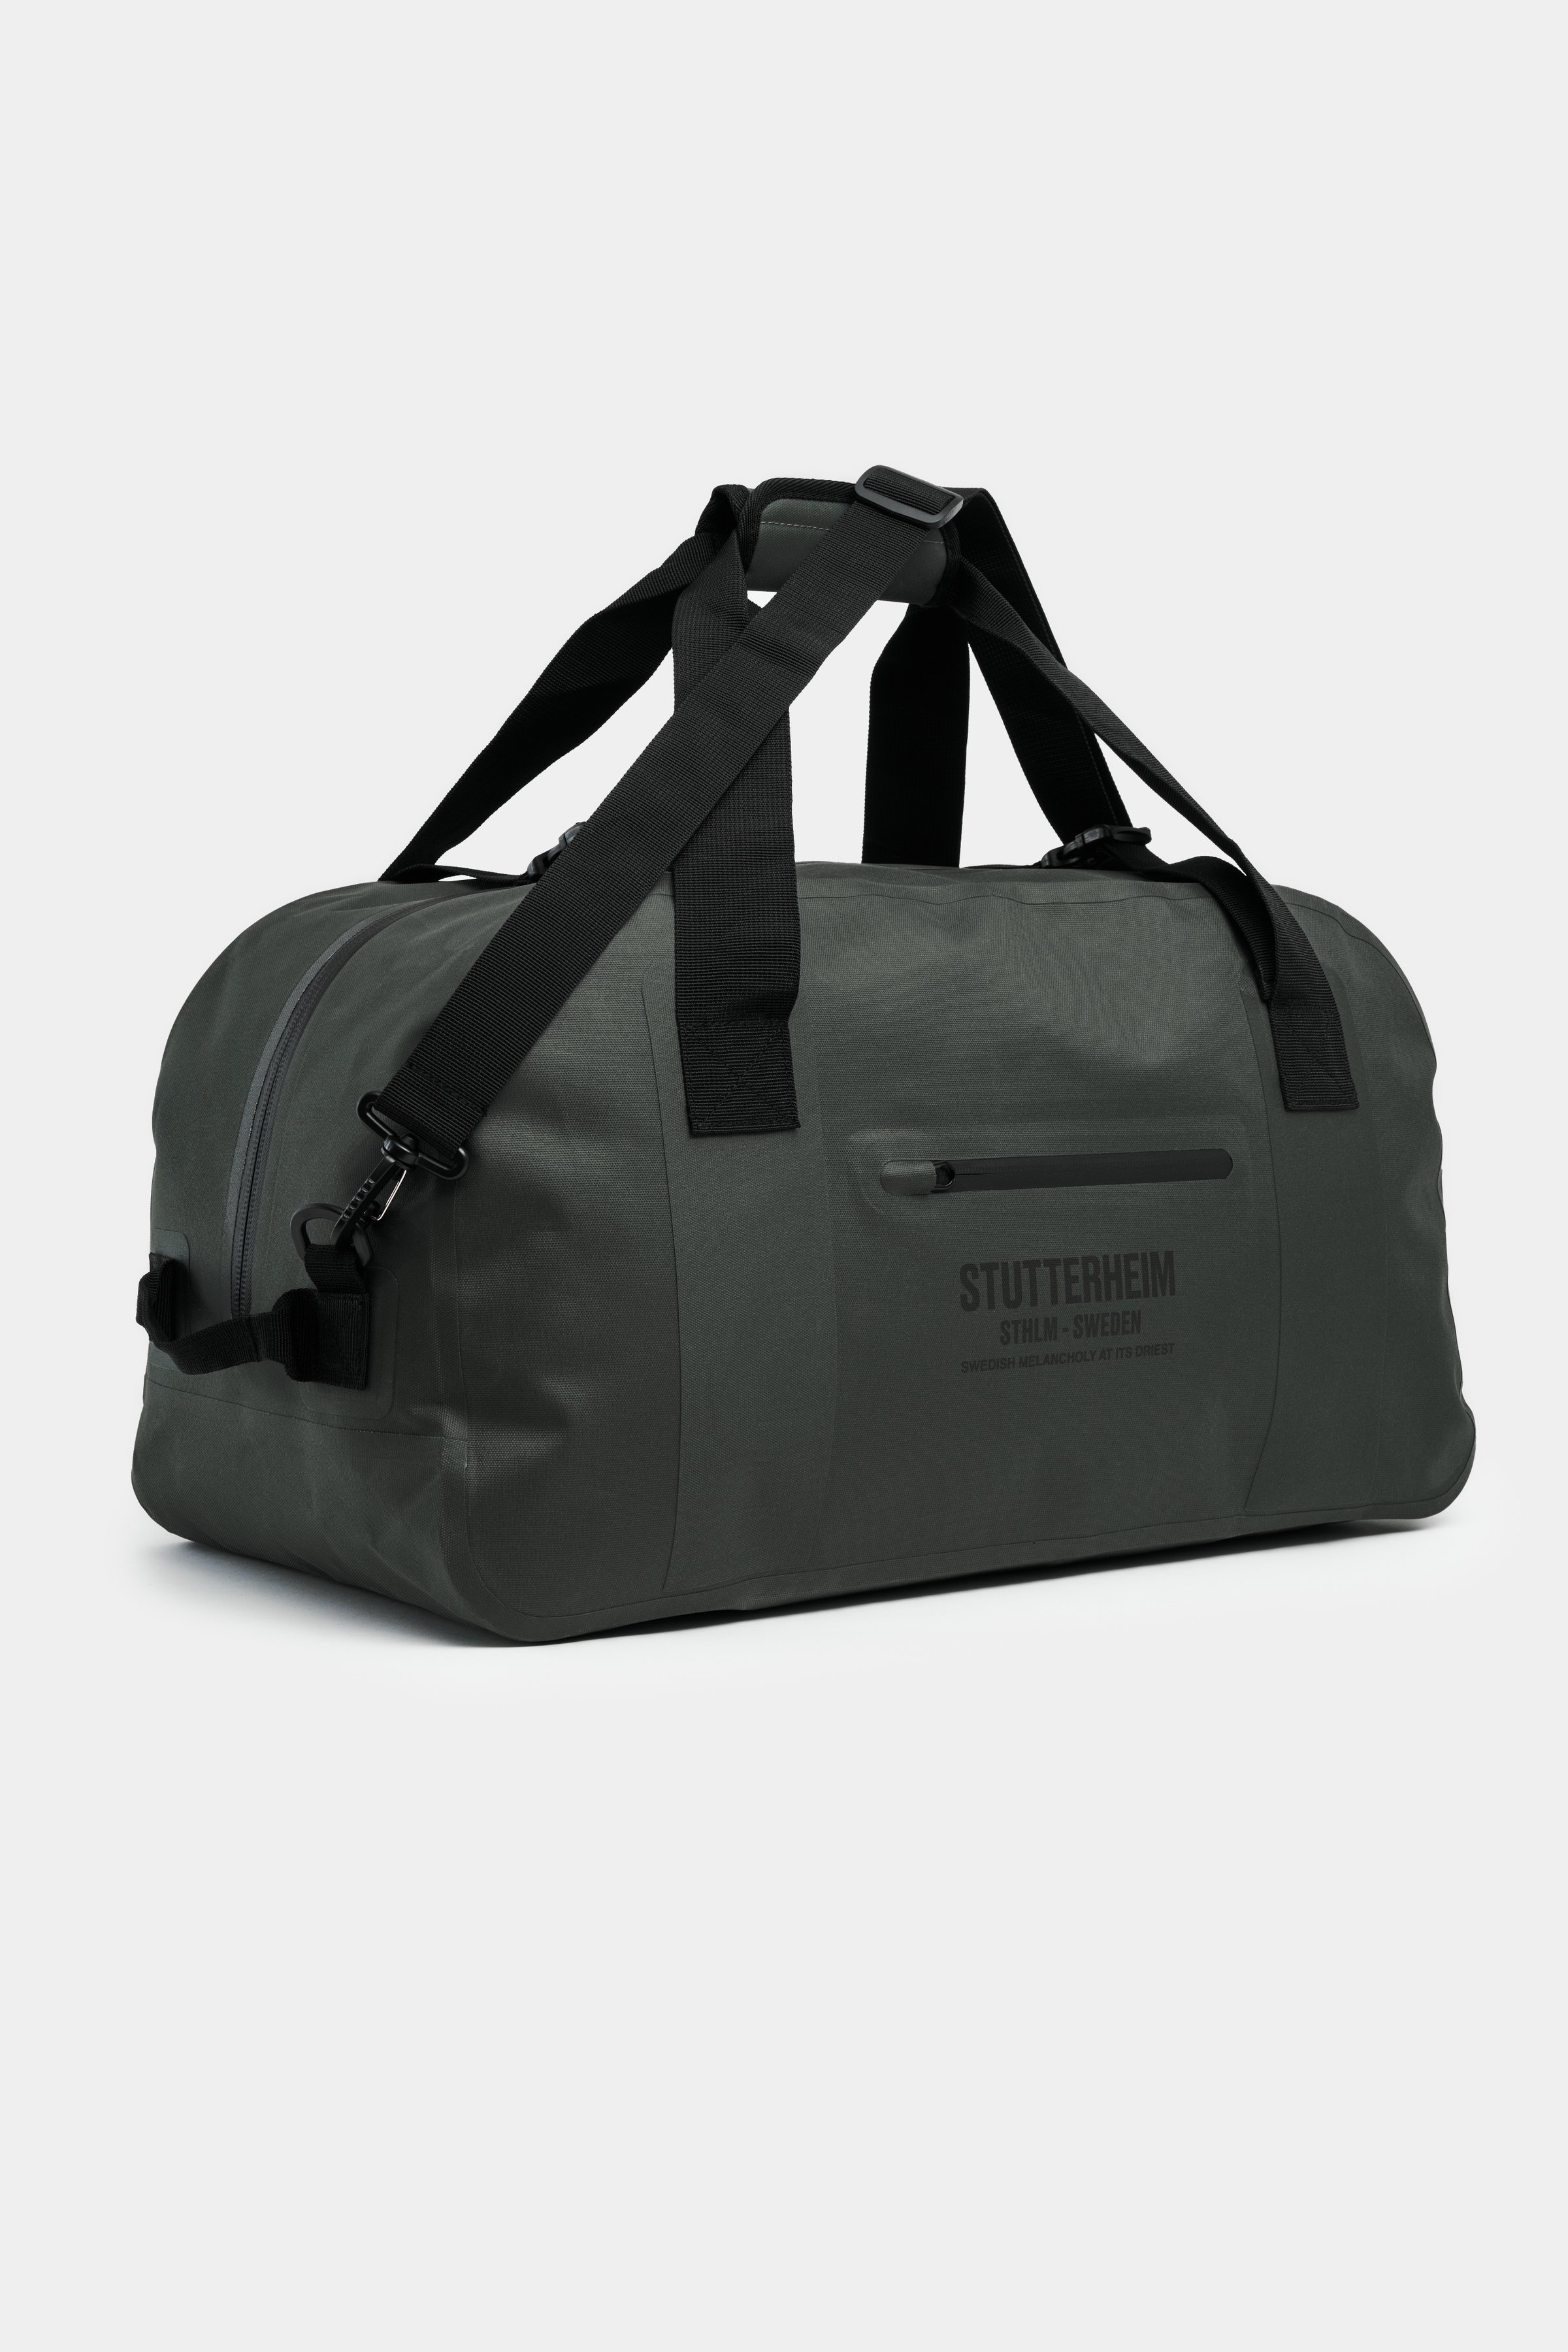 Rain Duffel Bag 50L Green - 2